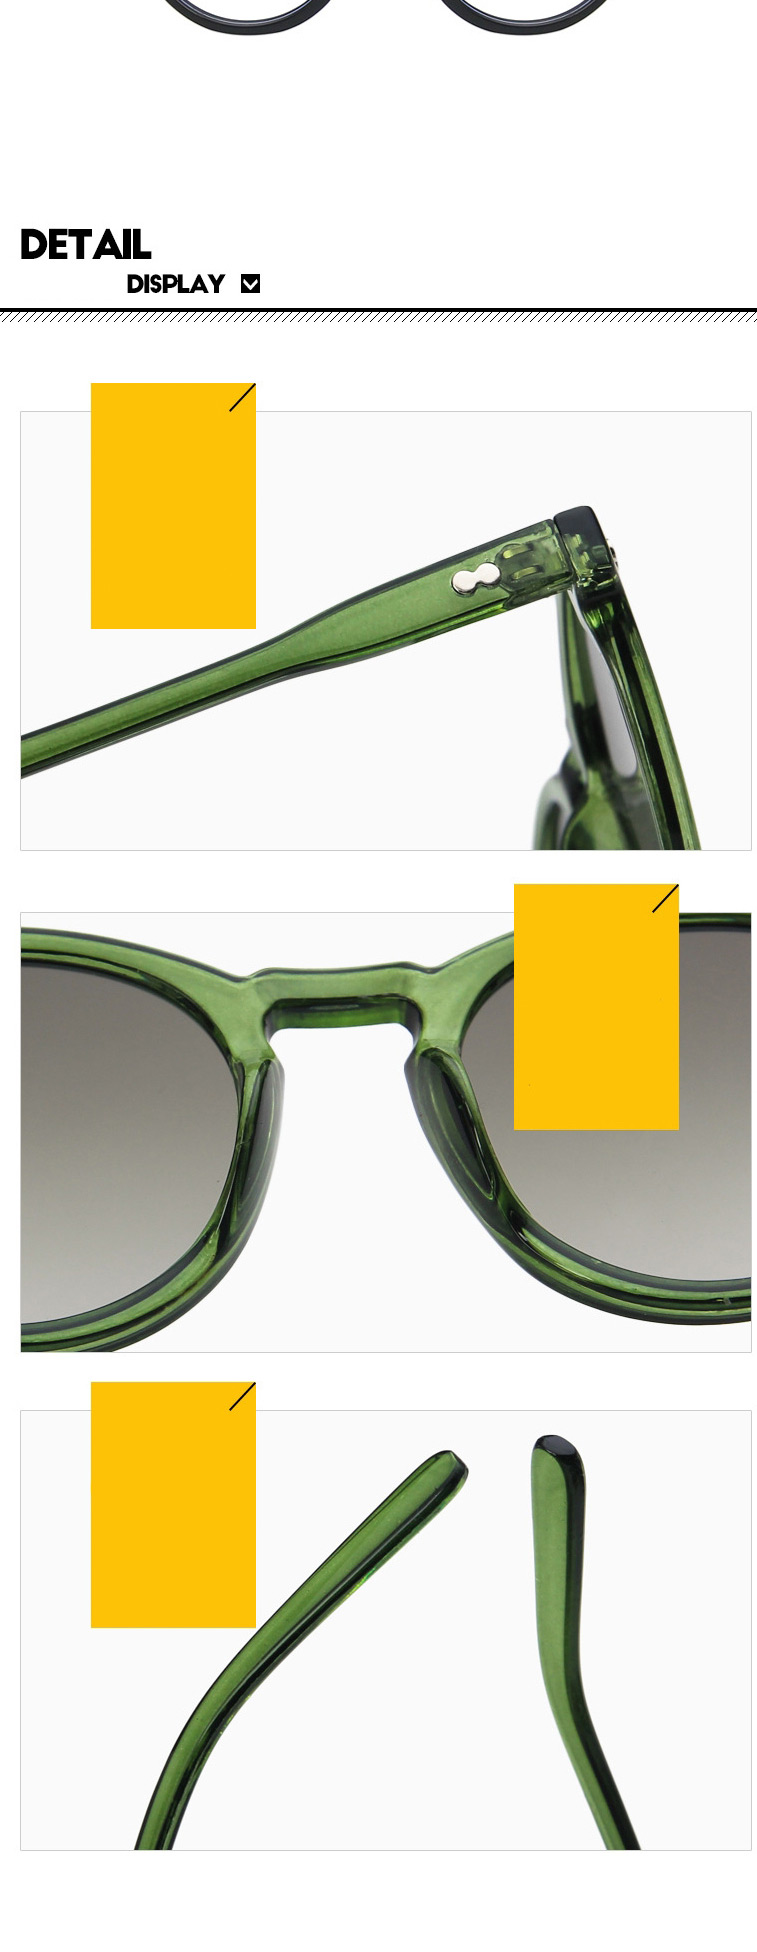 Fashion Bright Black And Yellow Film Small Frame Mi Nail Resin Round Sunglasses,Women Sunglasses